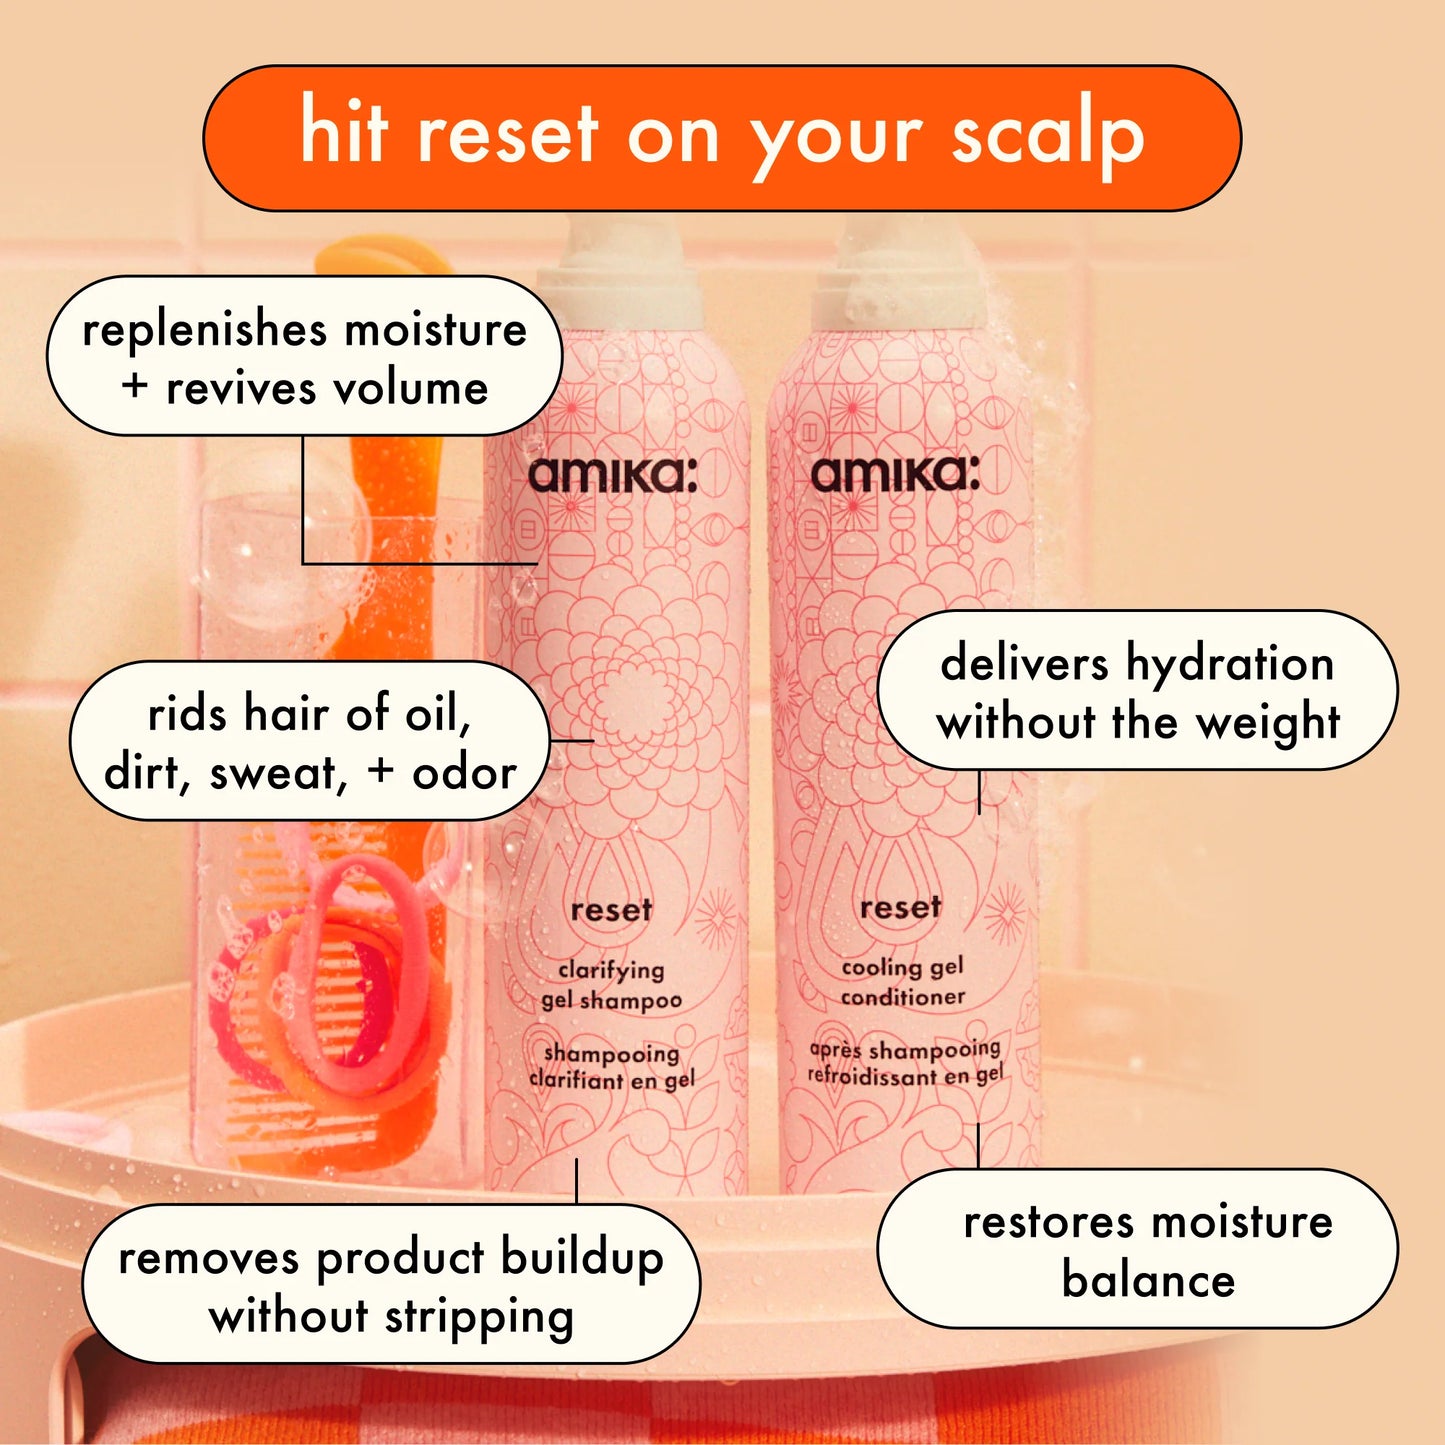 AMIKA RESET
Clarifying + Cleansing gel shampoo